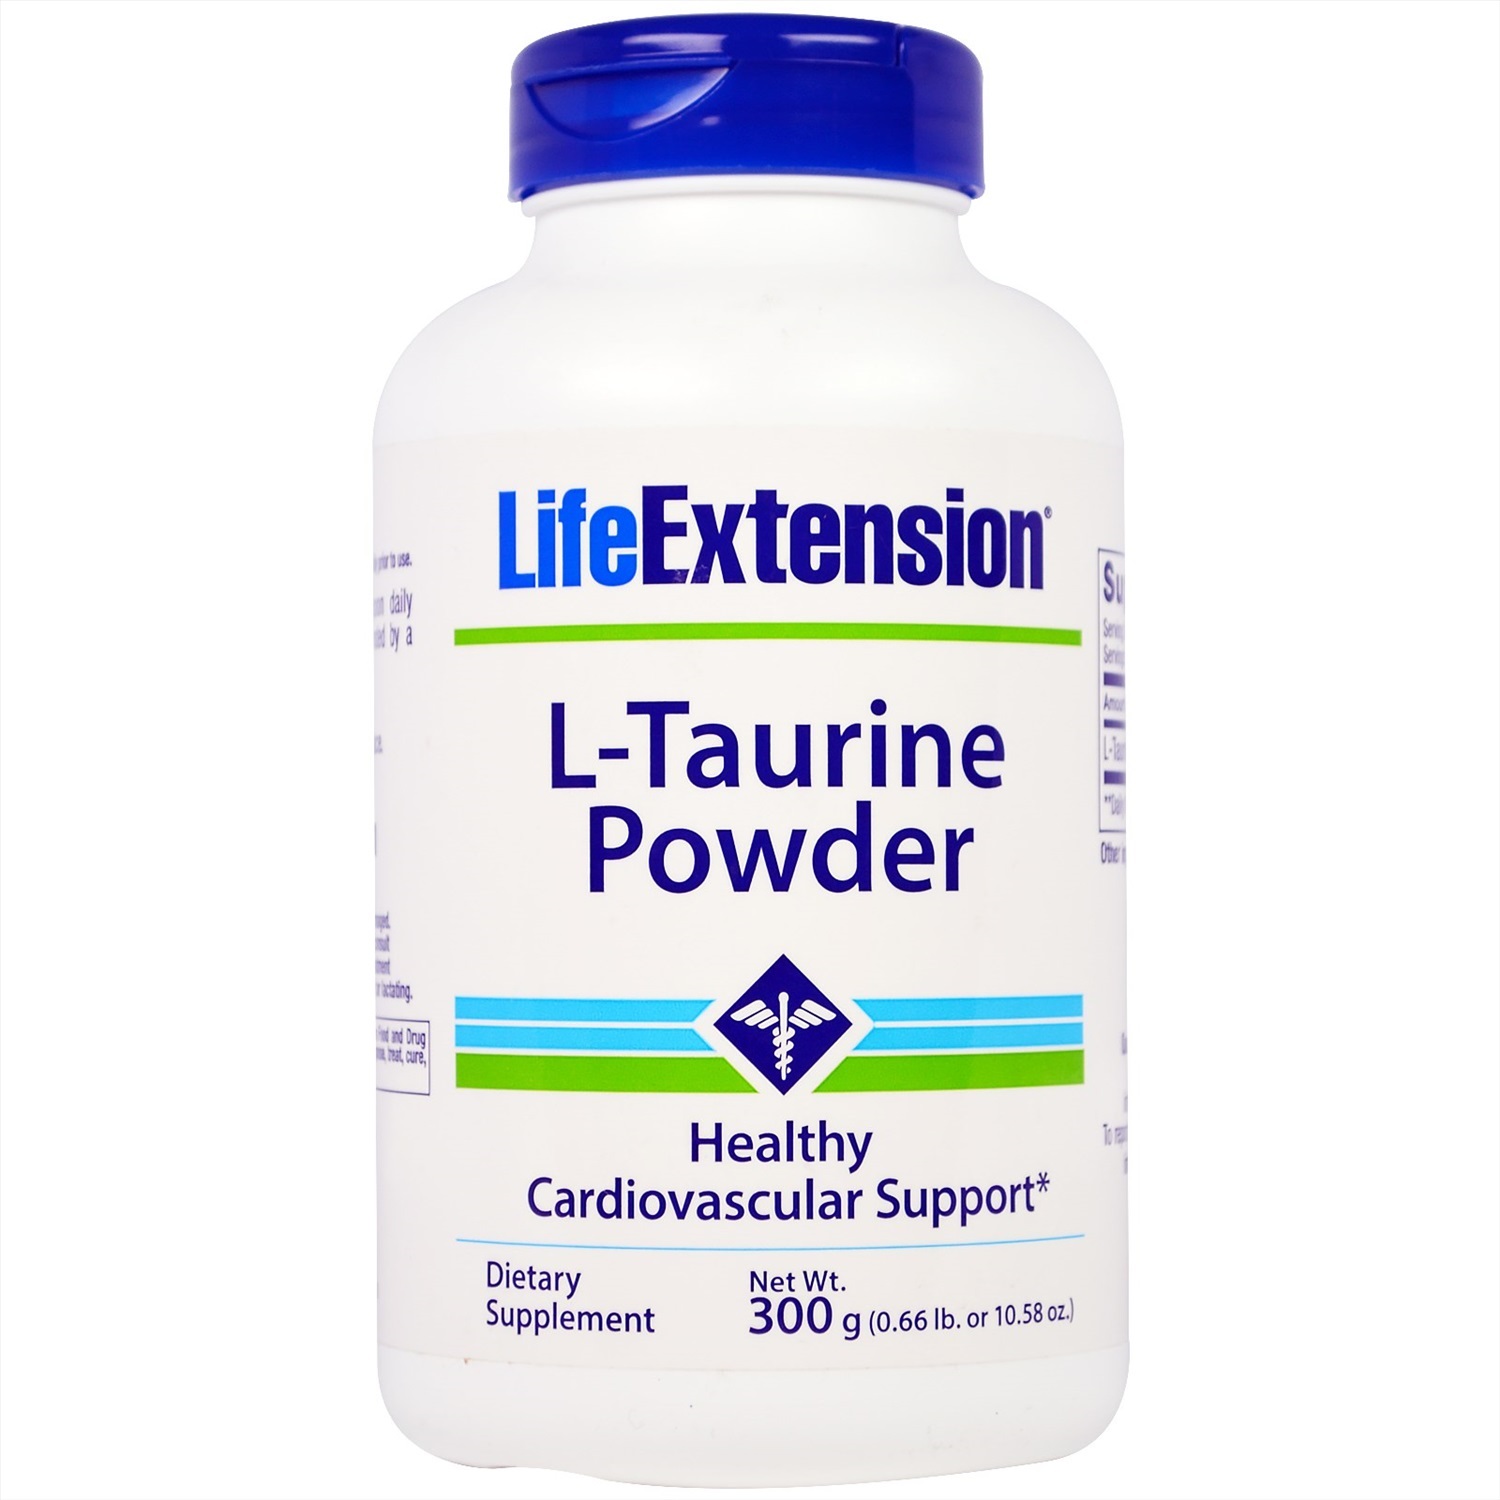 L extension. L-Taurine Powder Life Extension. Таурин лайф экстеншн. Таурин Life Extension. Life Extension таурин порошок.